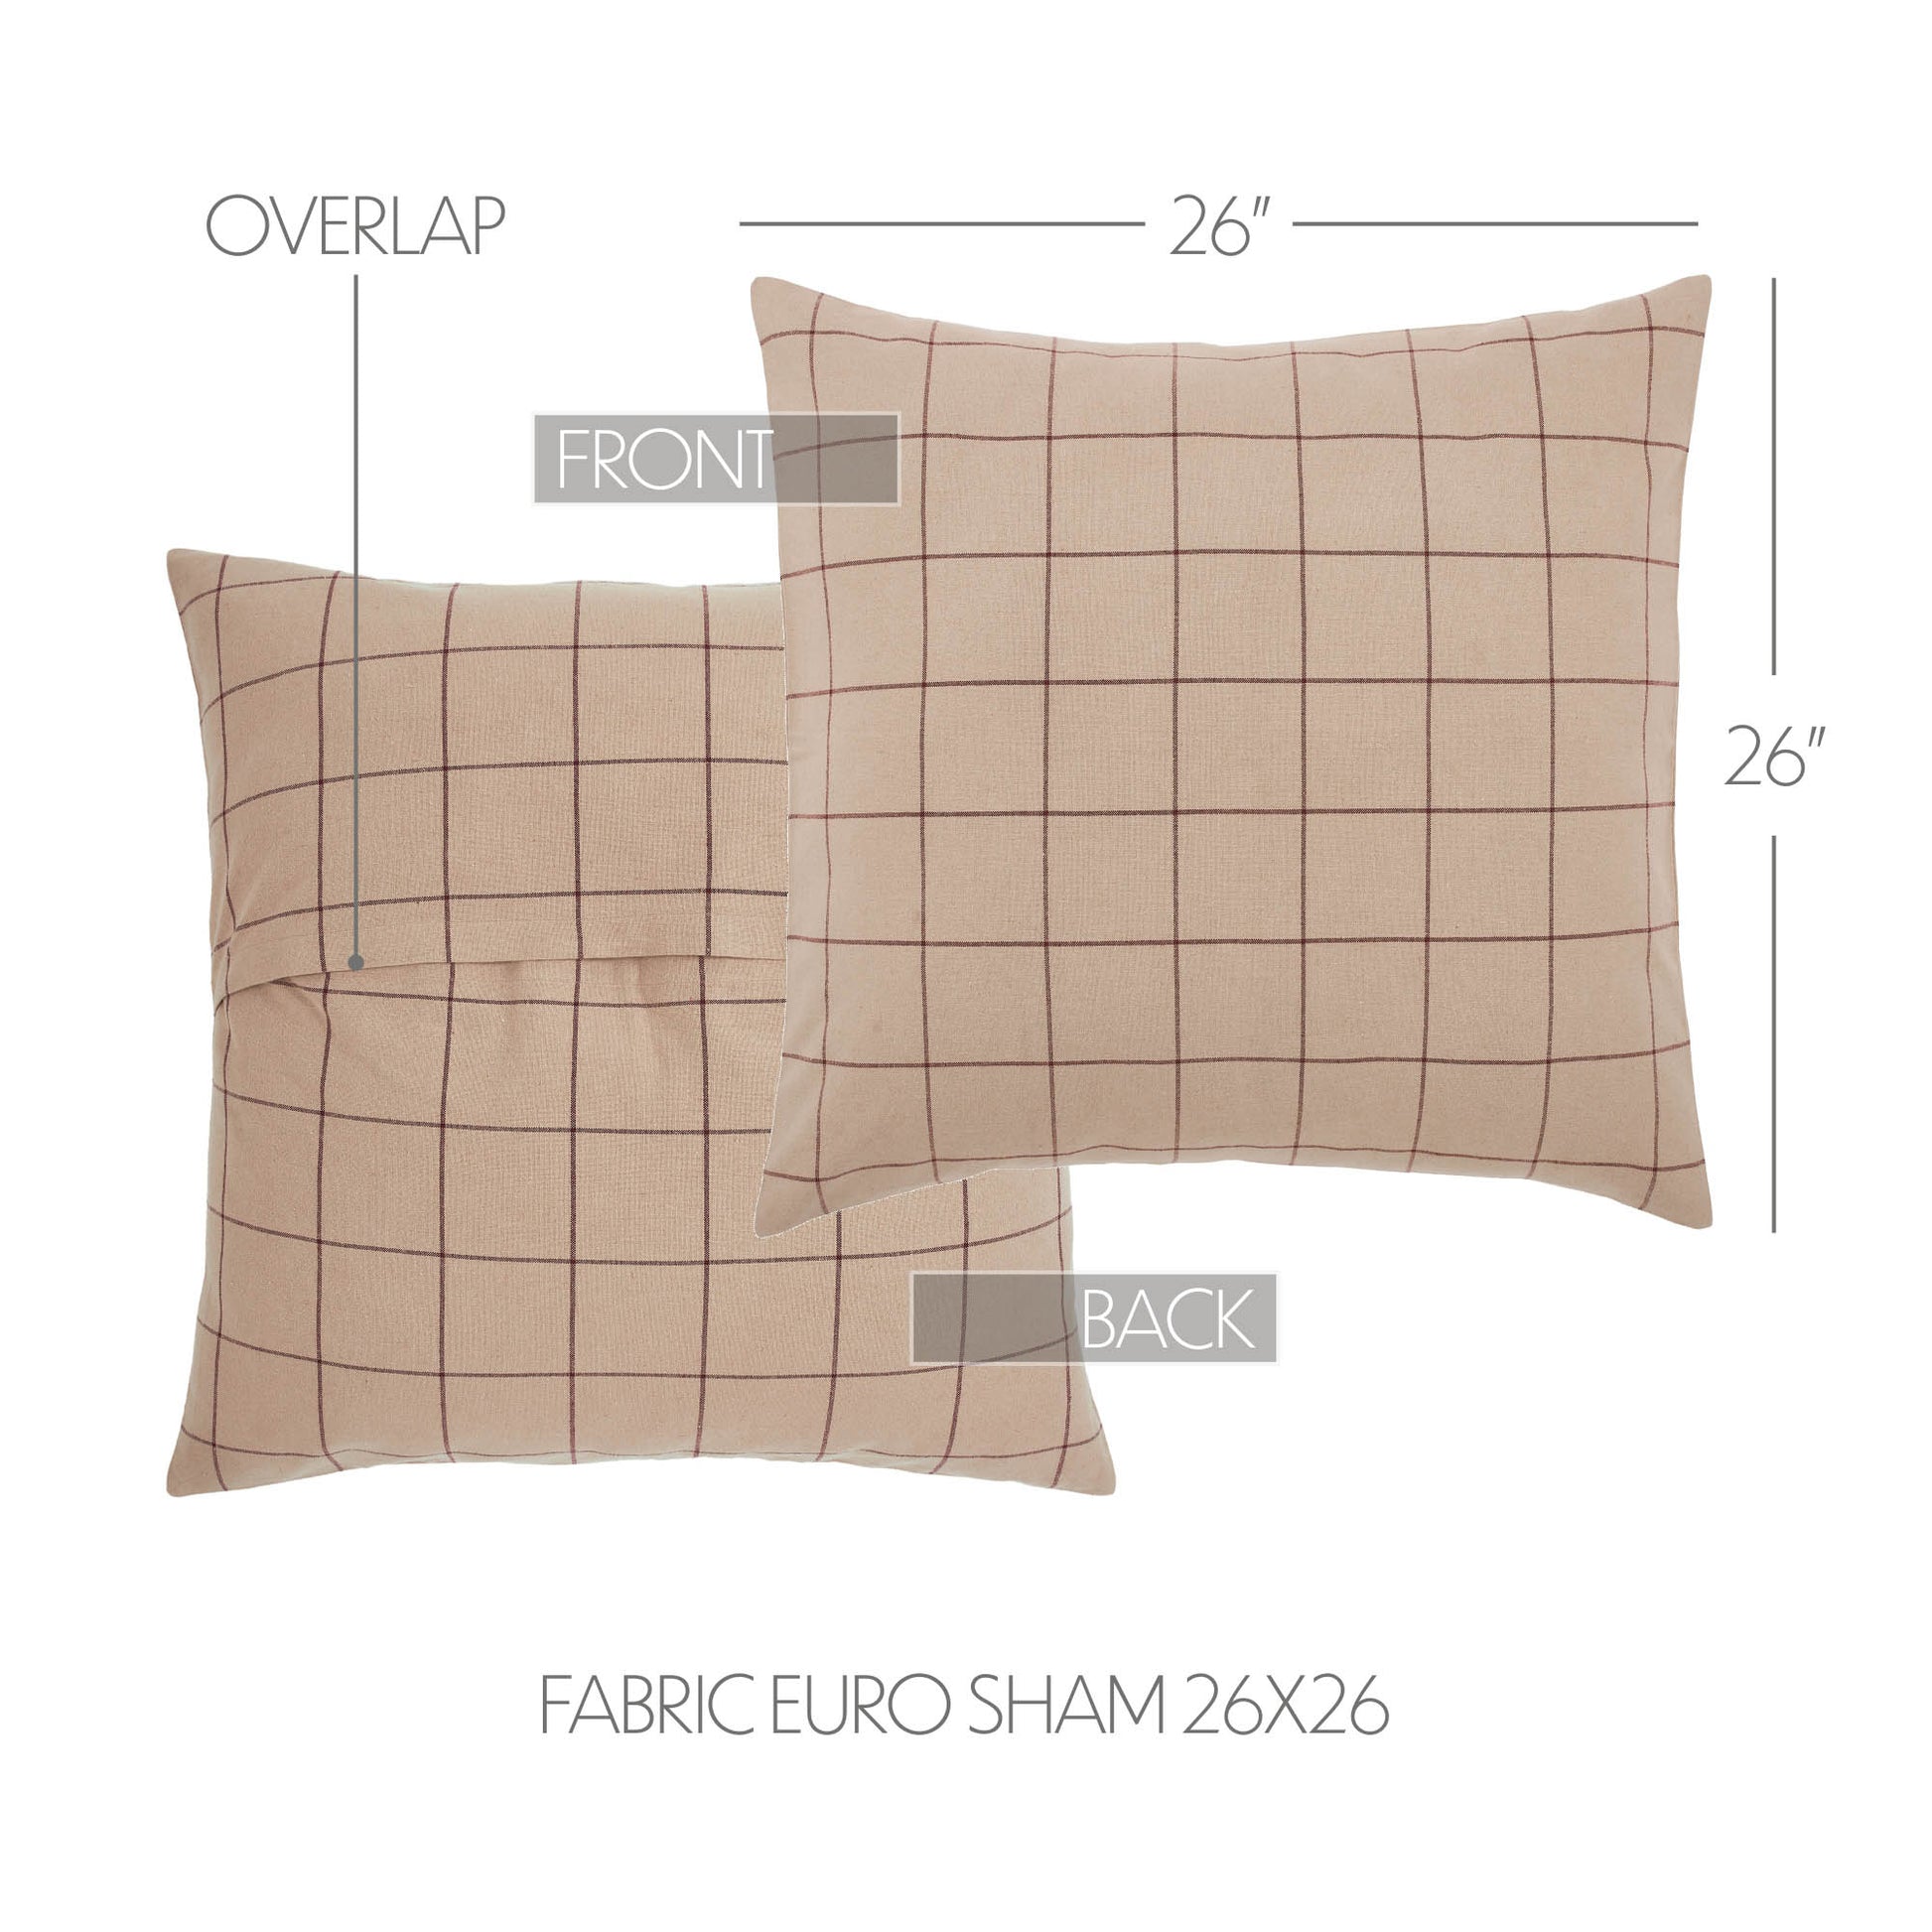 Connell Fabric Euro Sham 26x26 SpadezStore